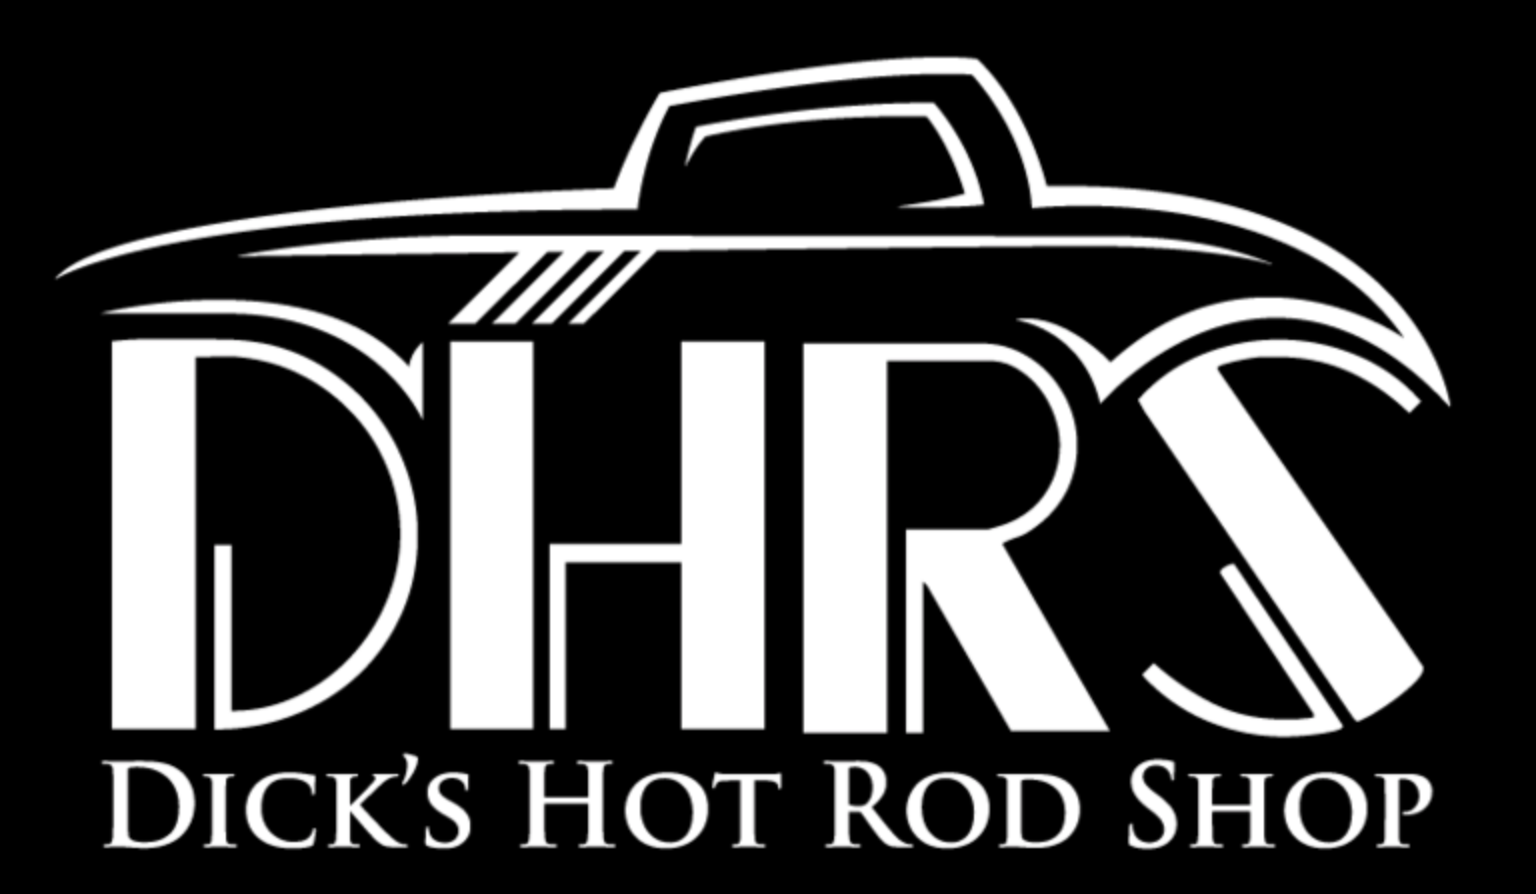 Dick’s Hot Rod Shop